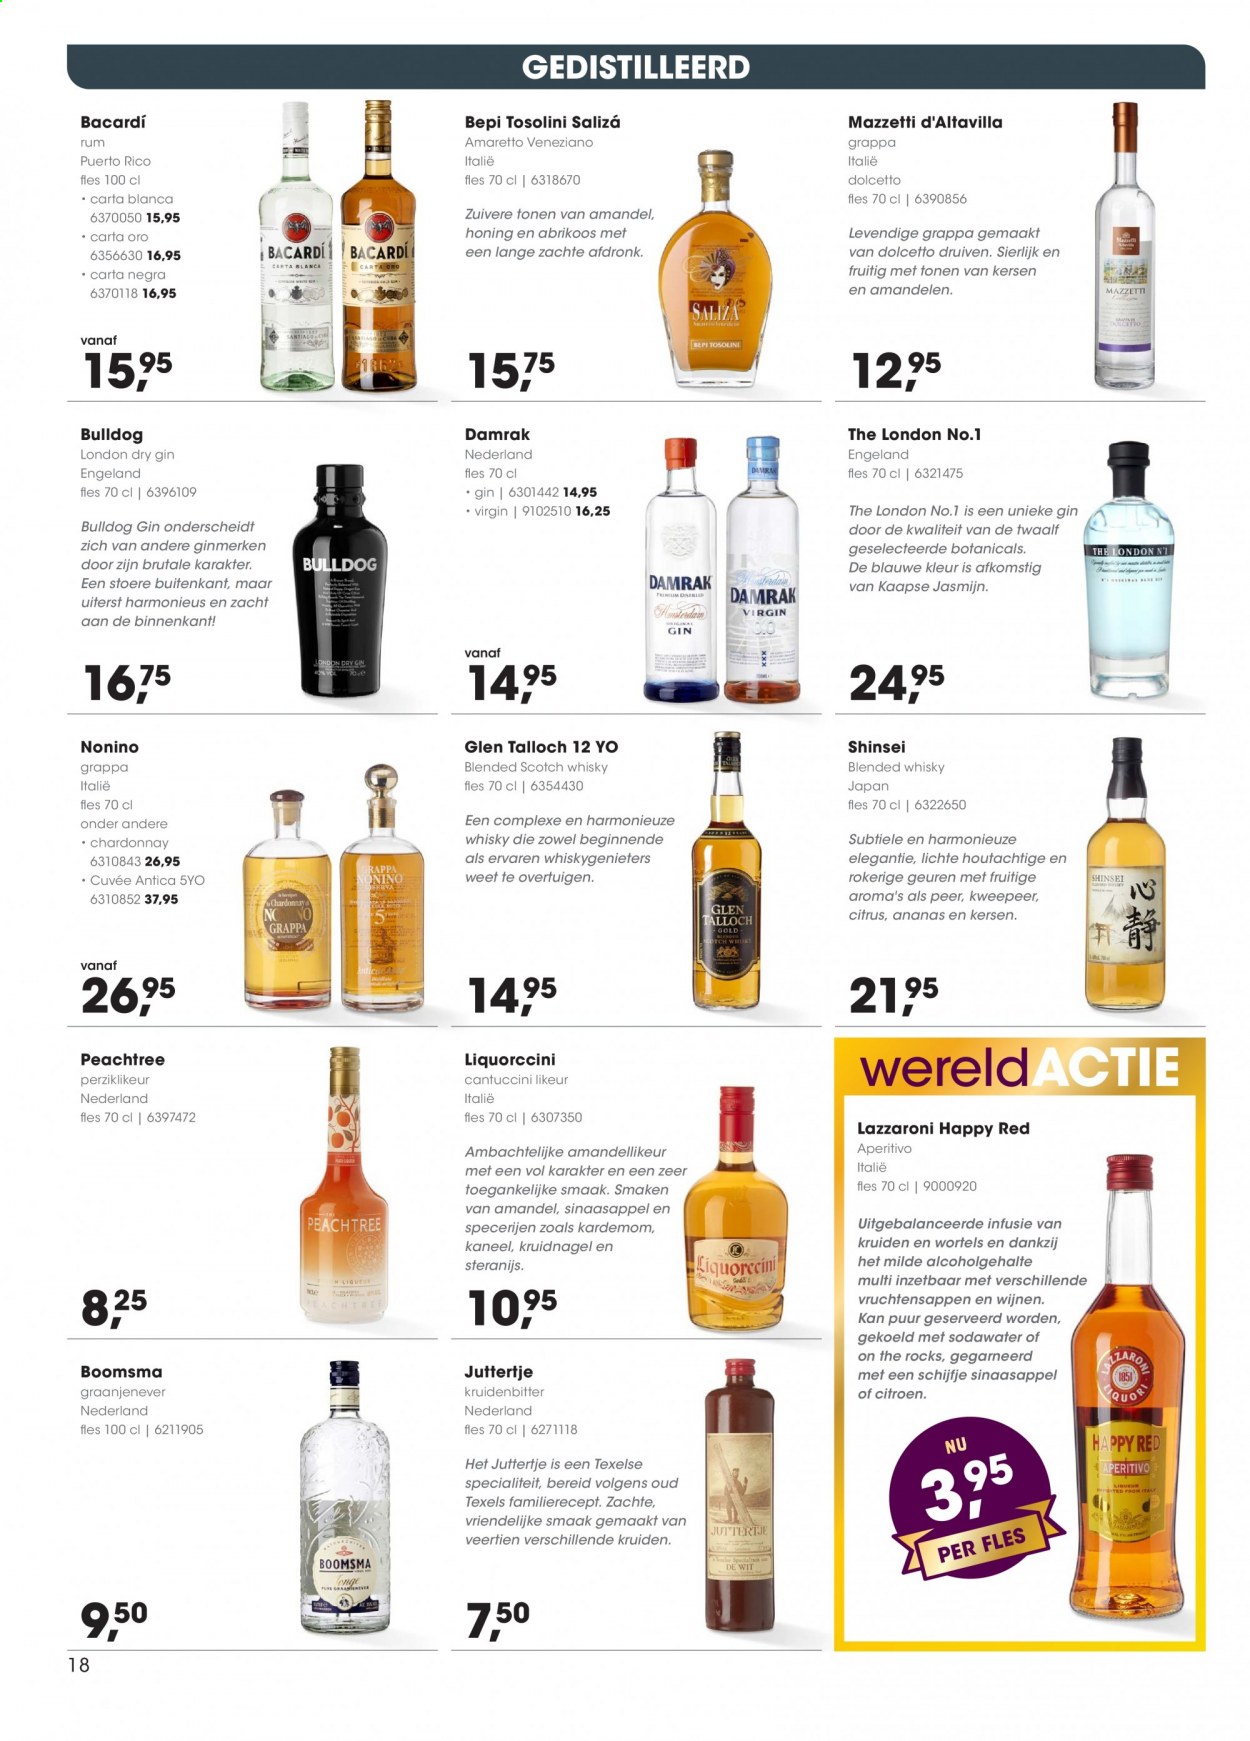 thumbnail - Hanos-aanbieding - 5-4-2021 - 18-4-2021 -  producten in de aanbieding - wortels, citroen, druiven, peer, sinaasappels, kaneel, kruidnagels, amandelen, Chardonnay, Bacardi, blended scotch whisky, rum, London Dry Gin, scotch whisky, whisky, gin, Grappa, Amaretto, Jenever. Pagina 18.